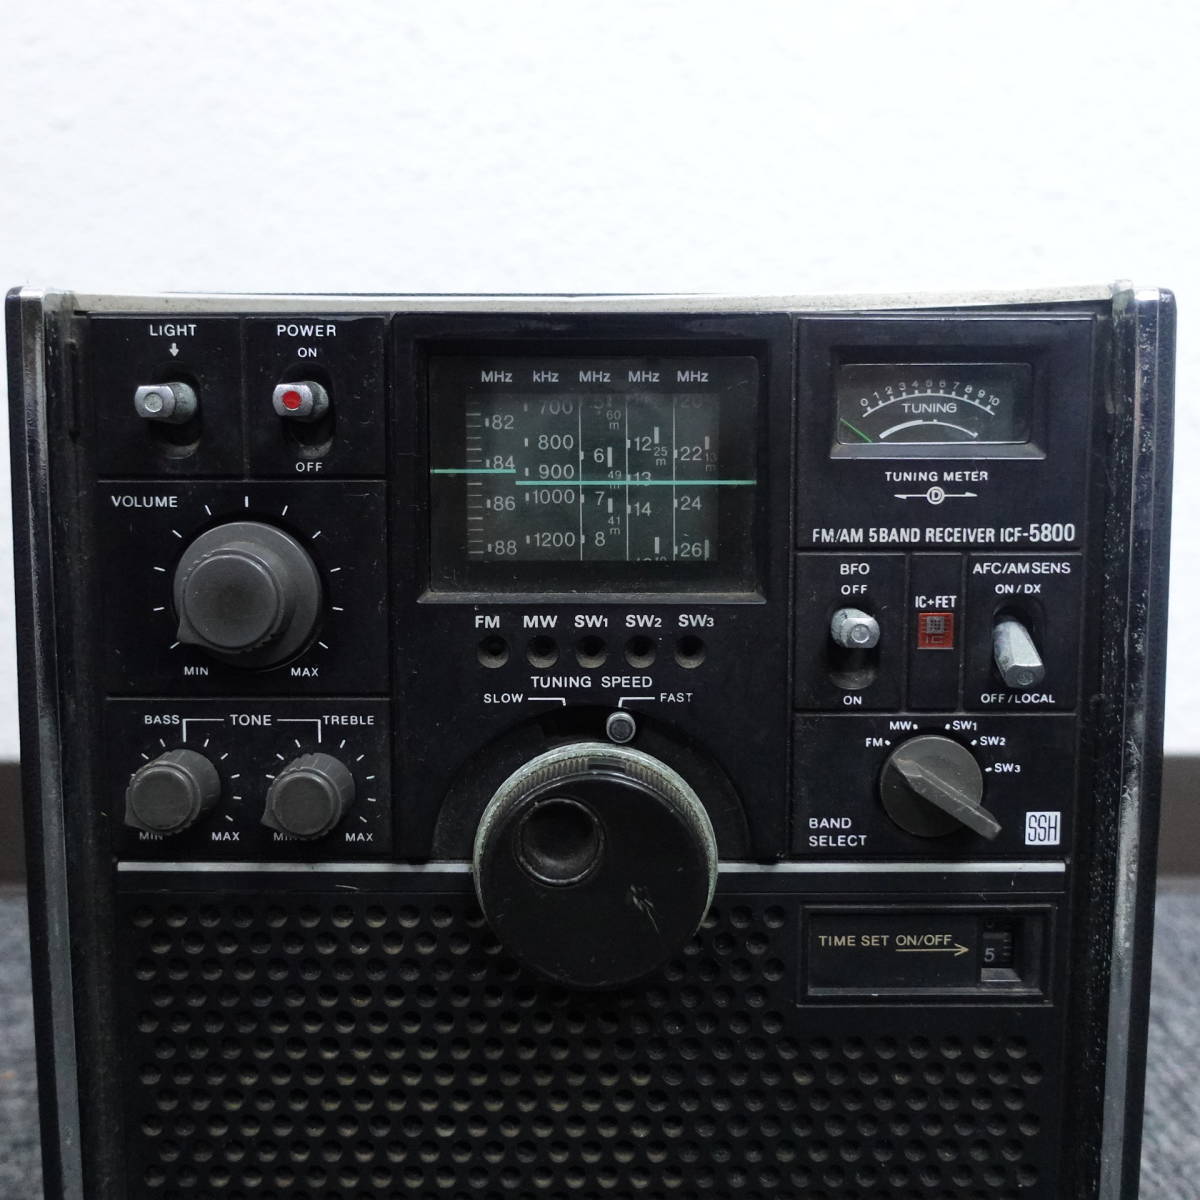 SONY ICF-5800 FM/AM 5BAND RECEIVER ジャンク ソニー ラジオ オーディオ機器_画像2